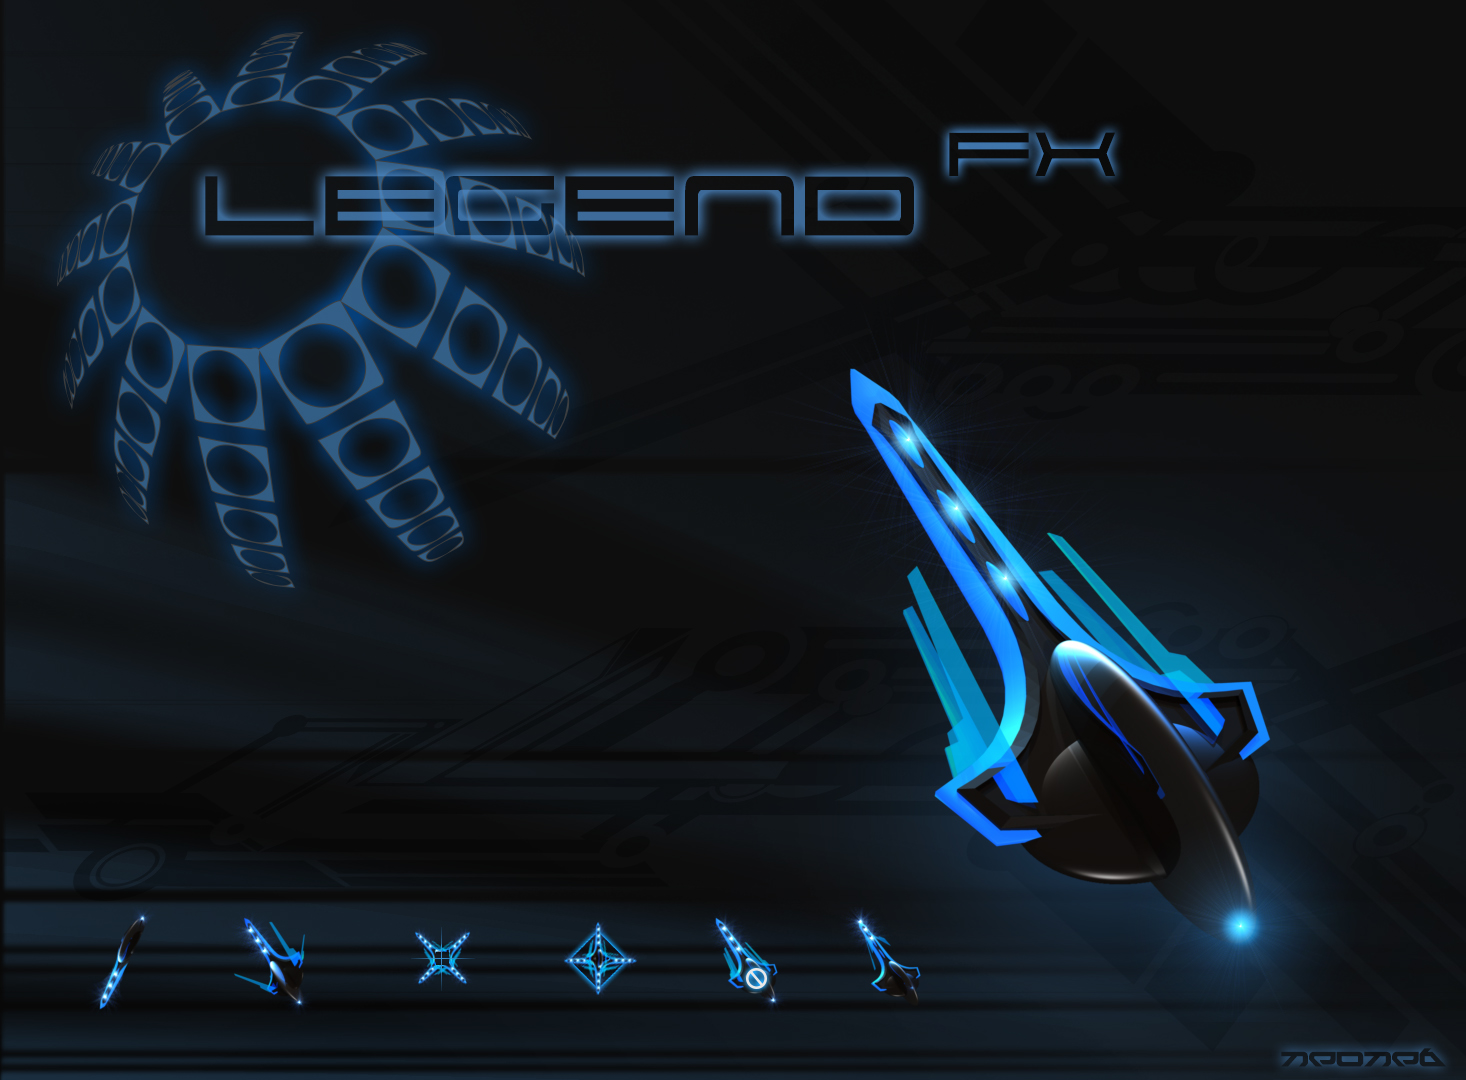 Legend FX theme by neone6